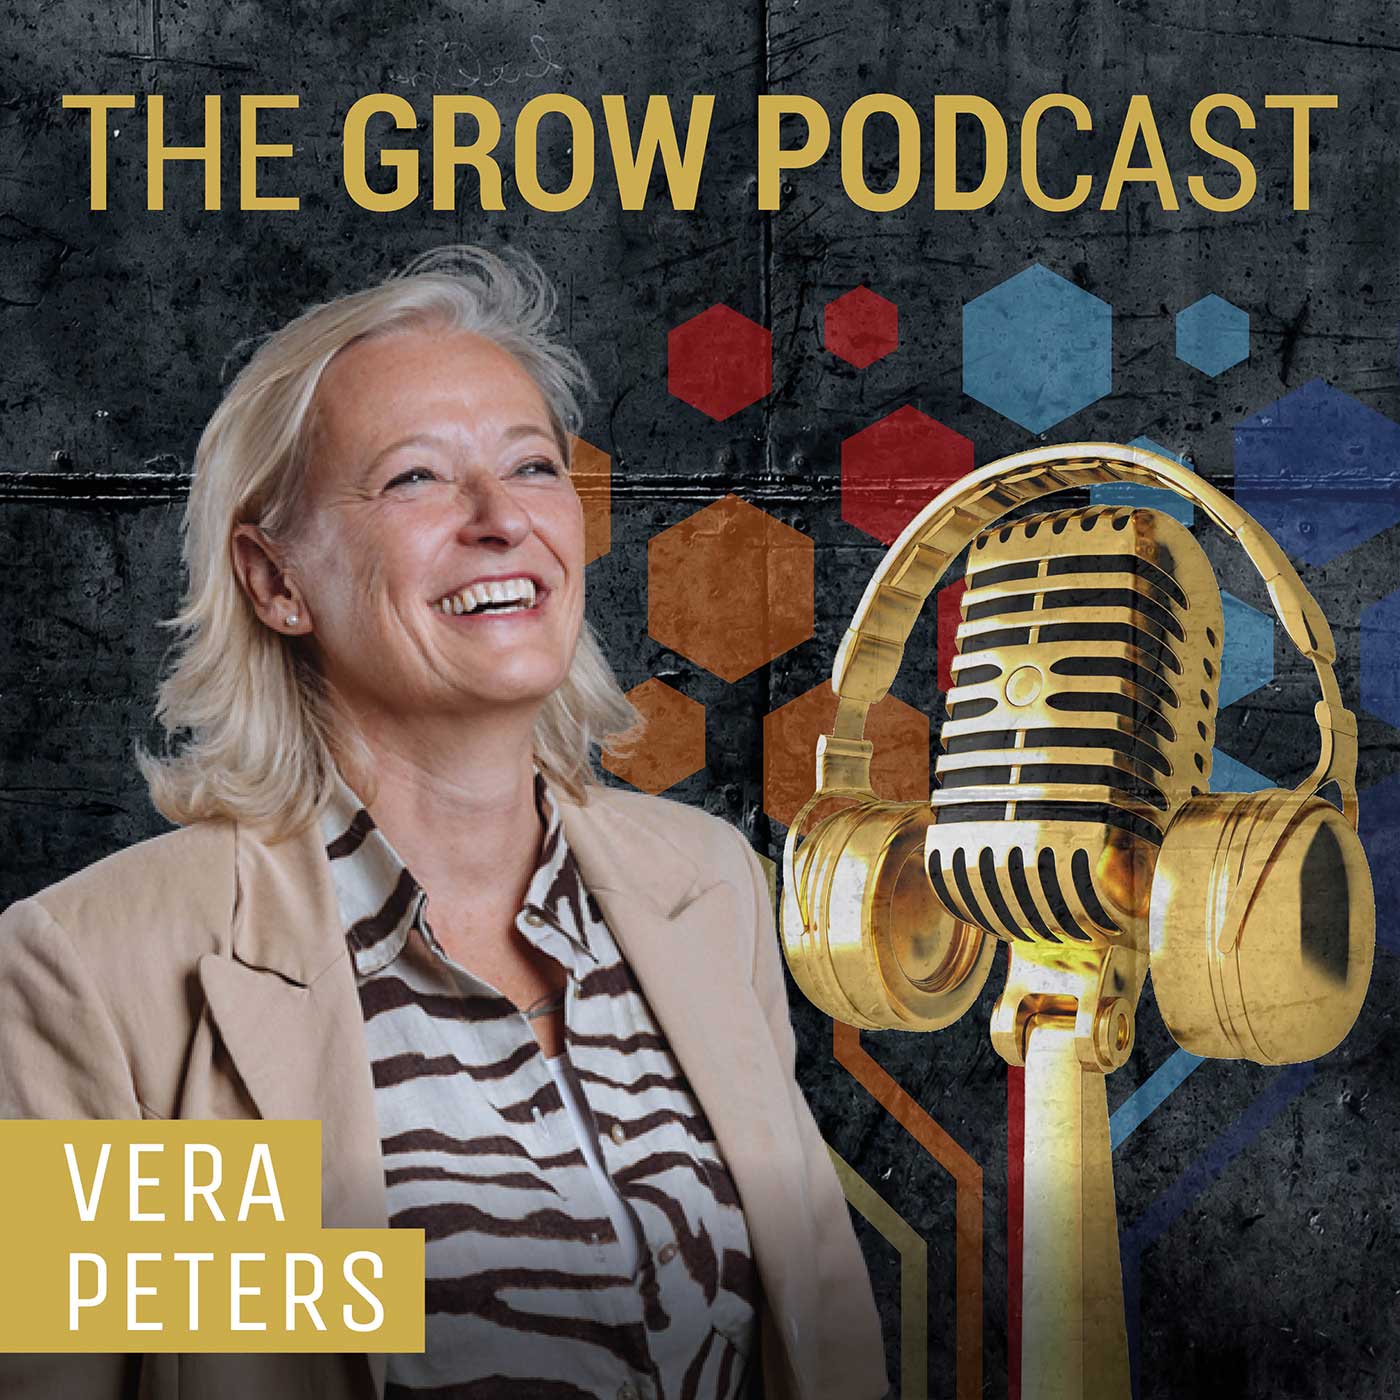 Vera Peters 🦁 Life-Safari als Game Changer!